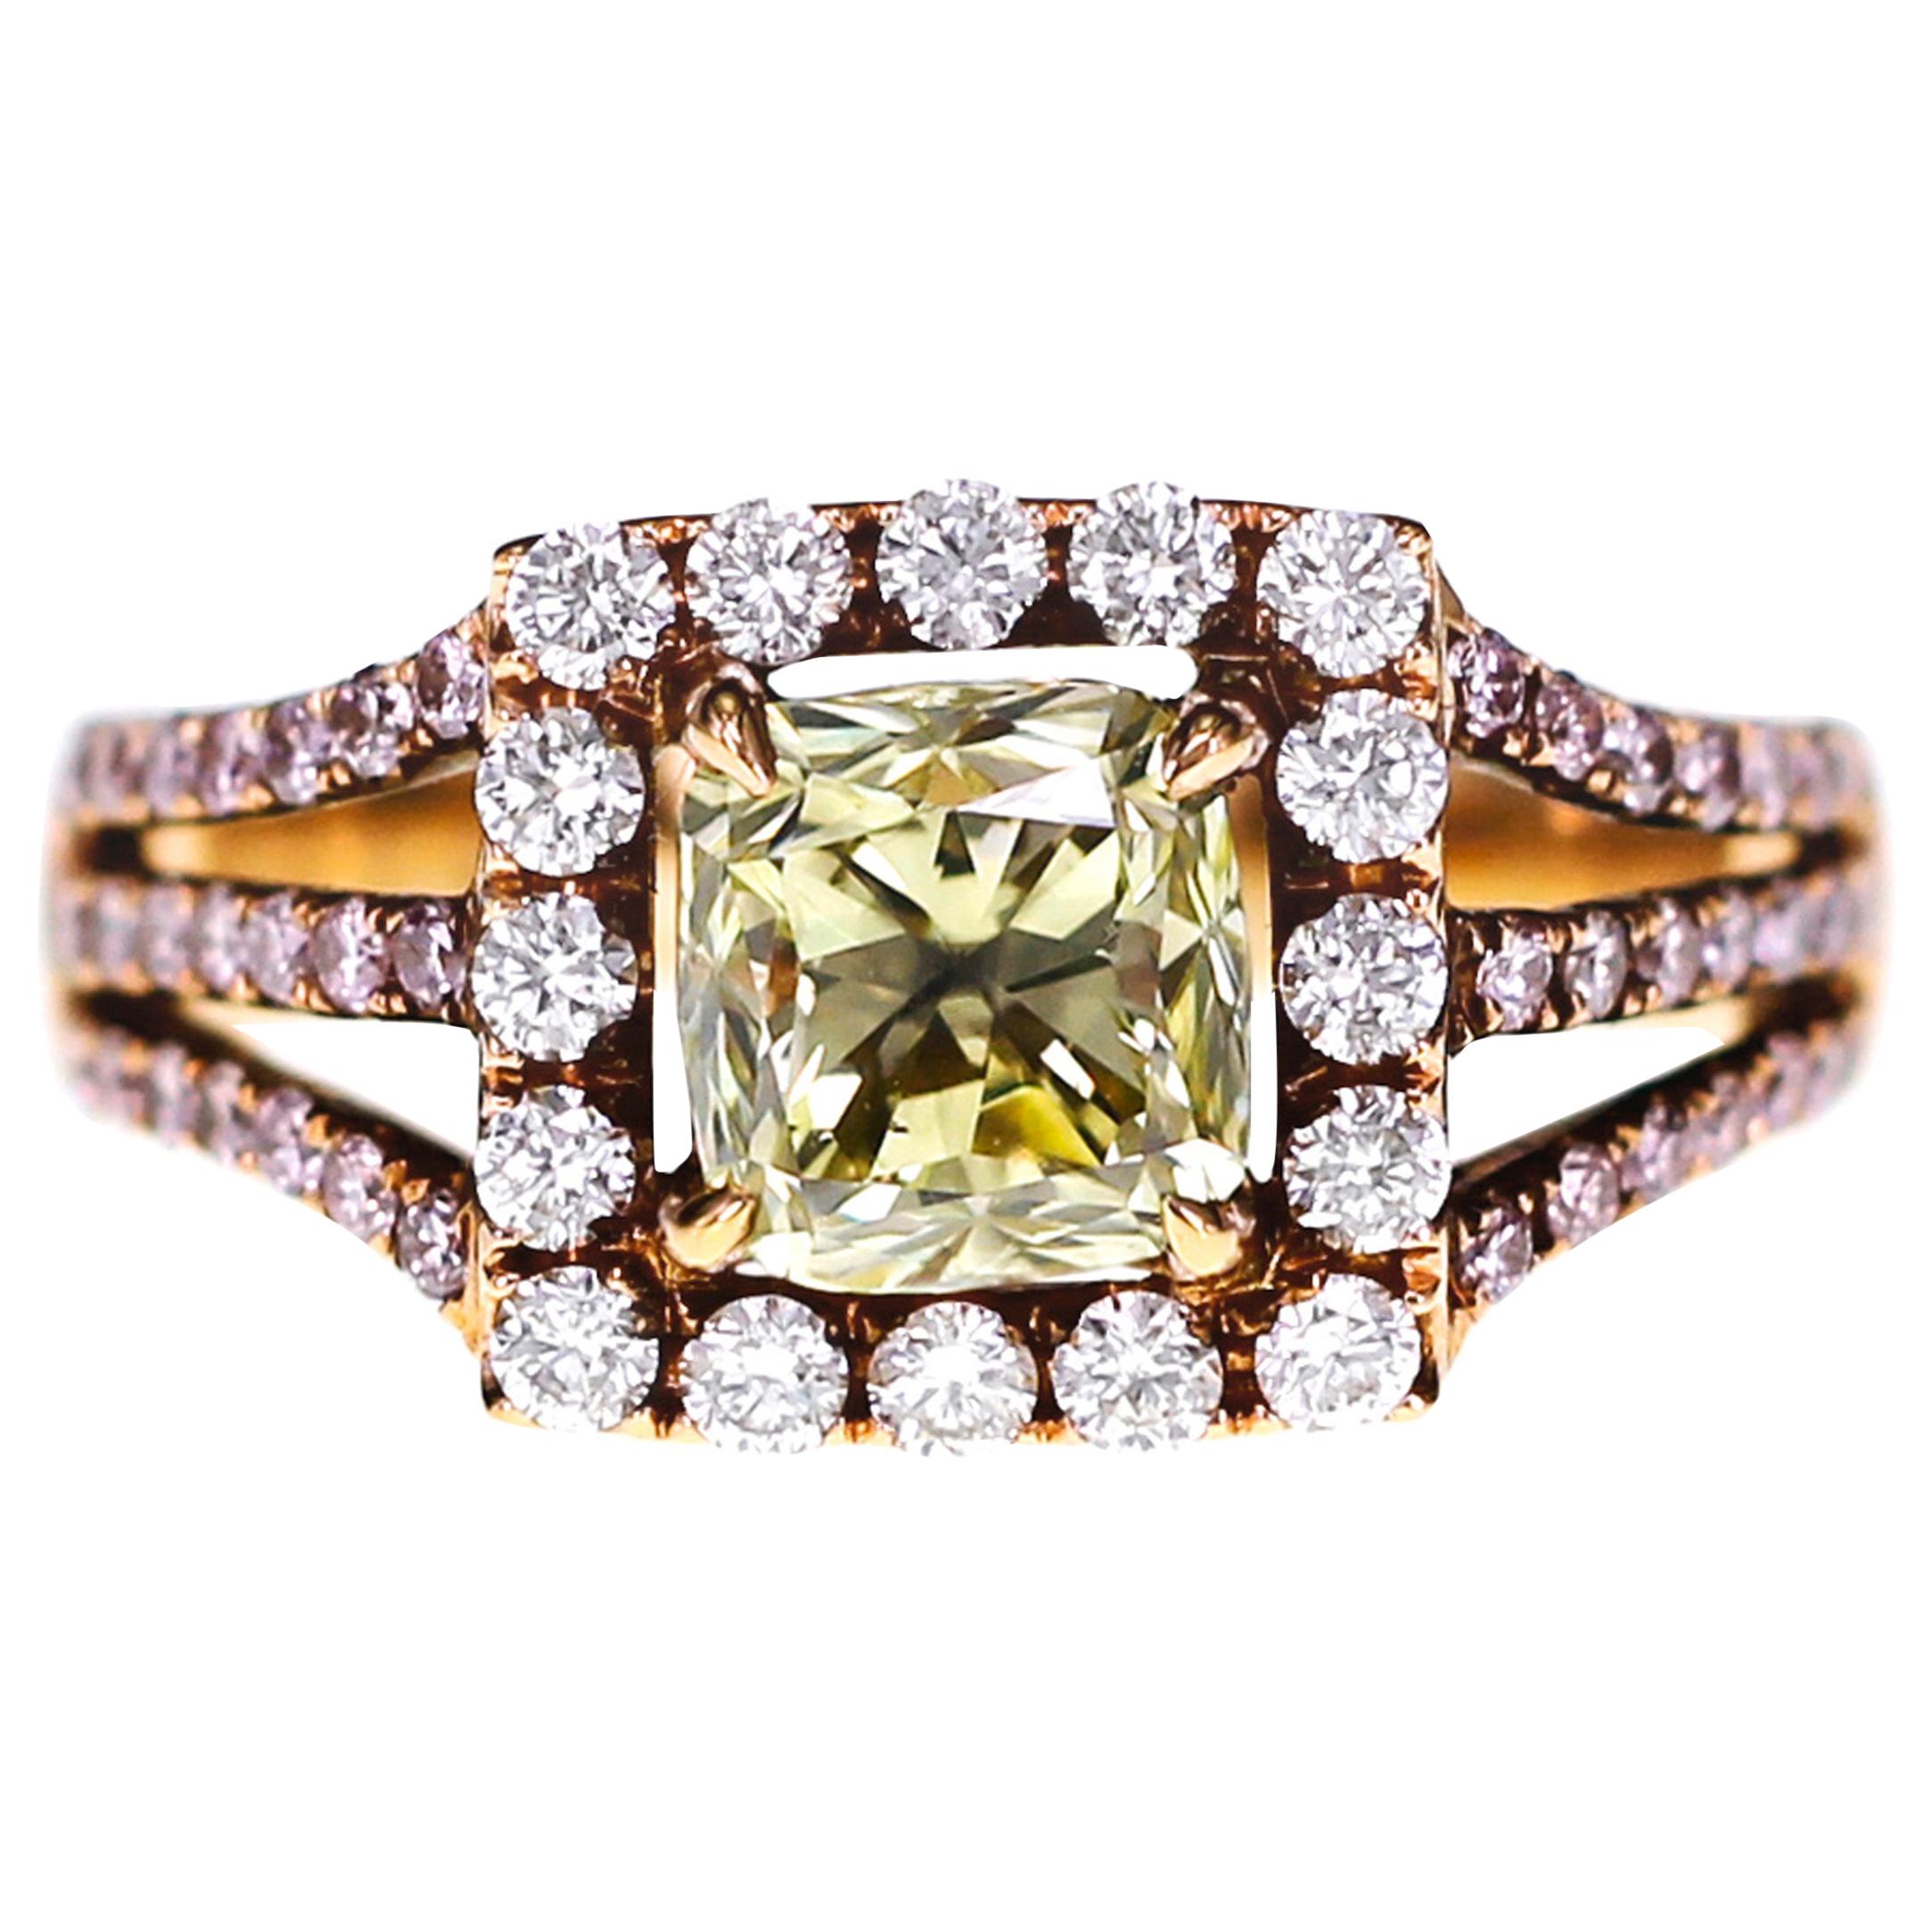 IGI Certified 1.70 Carat Natural Fancy Light Yellow Diamond Solitaire Ring